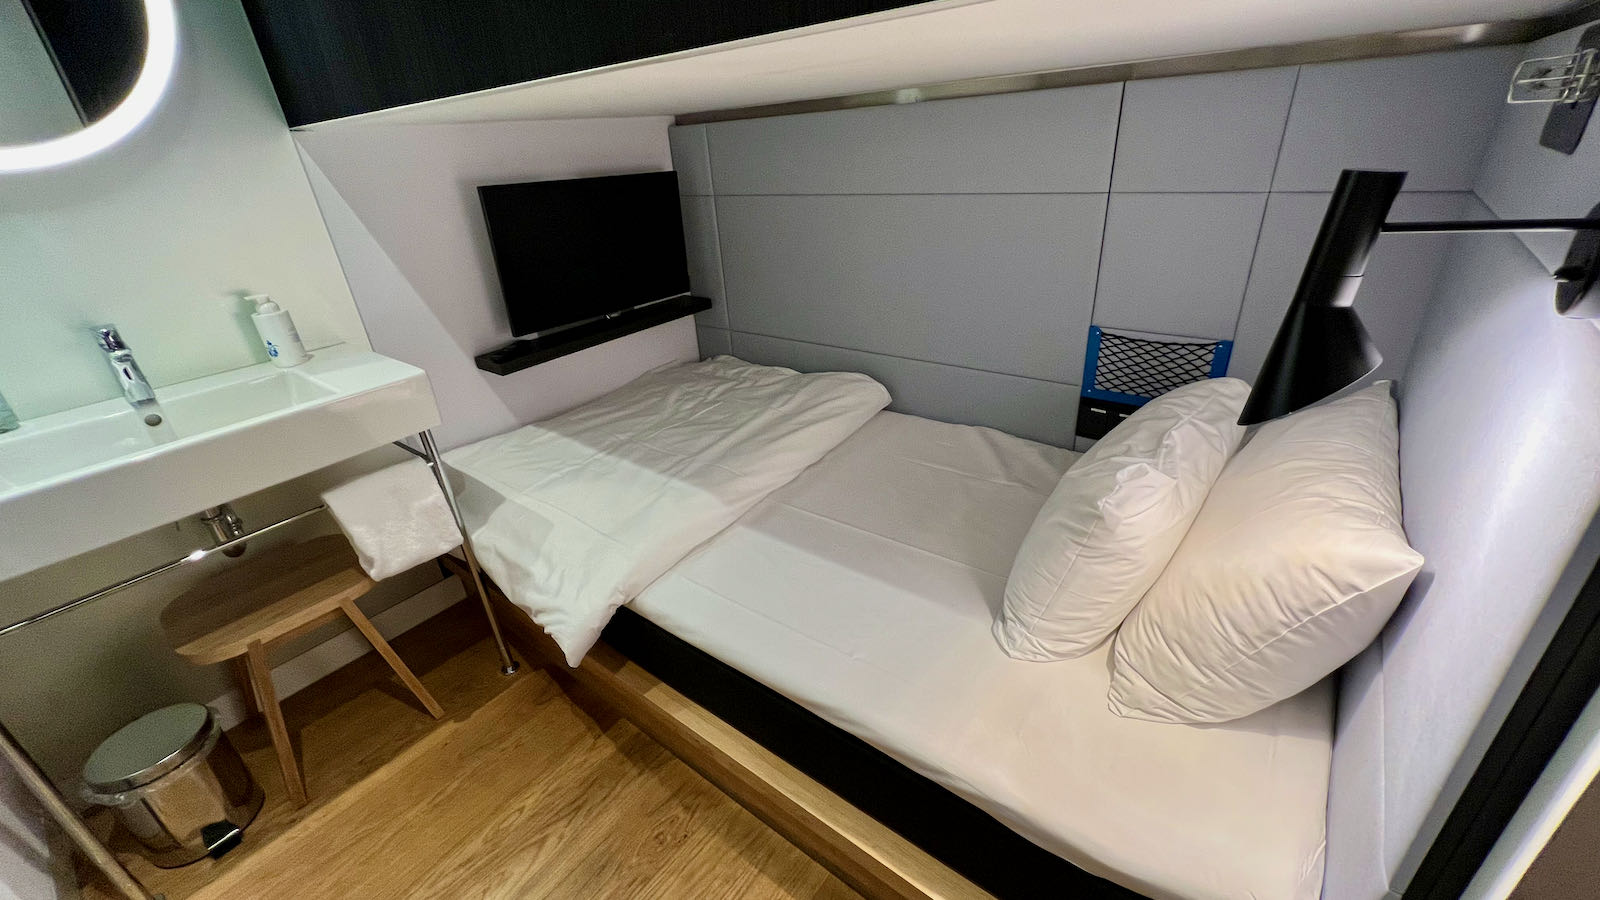 KLM 52 lounge Amsterdam pay-to-use sleeping pod